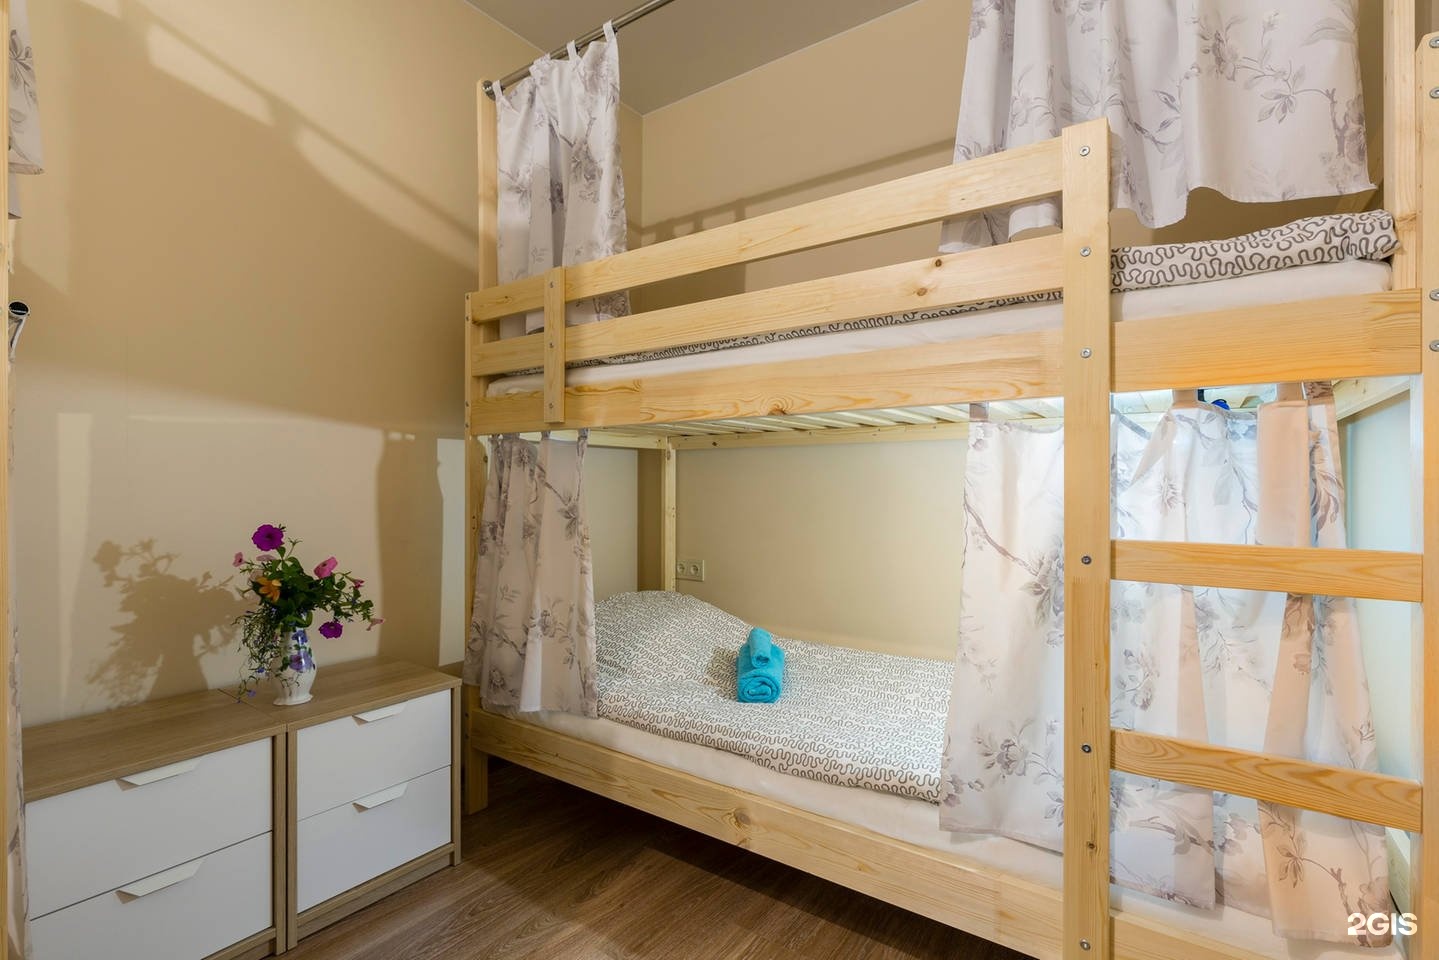 Кровати для хостела двухъярусные со шторками